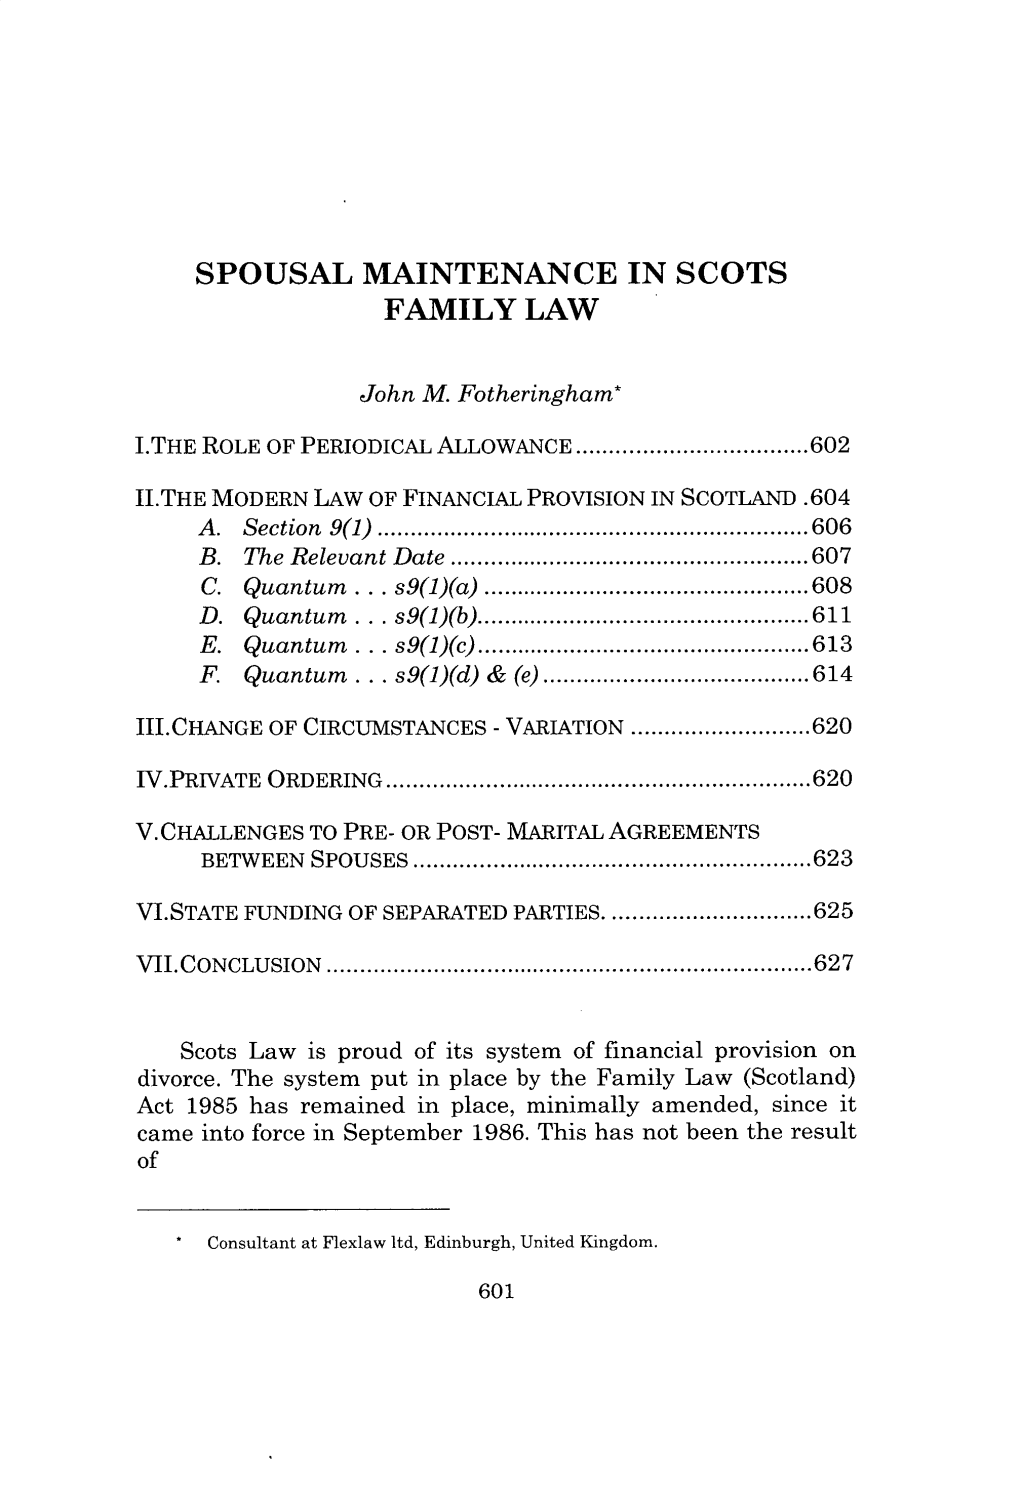 Spousal Maintenance in Scots Family Law